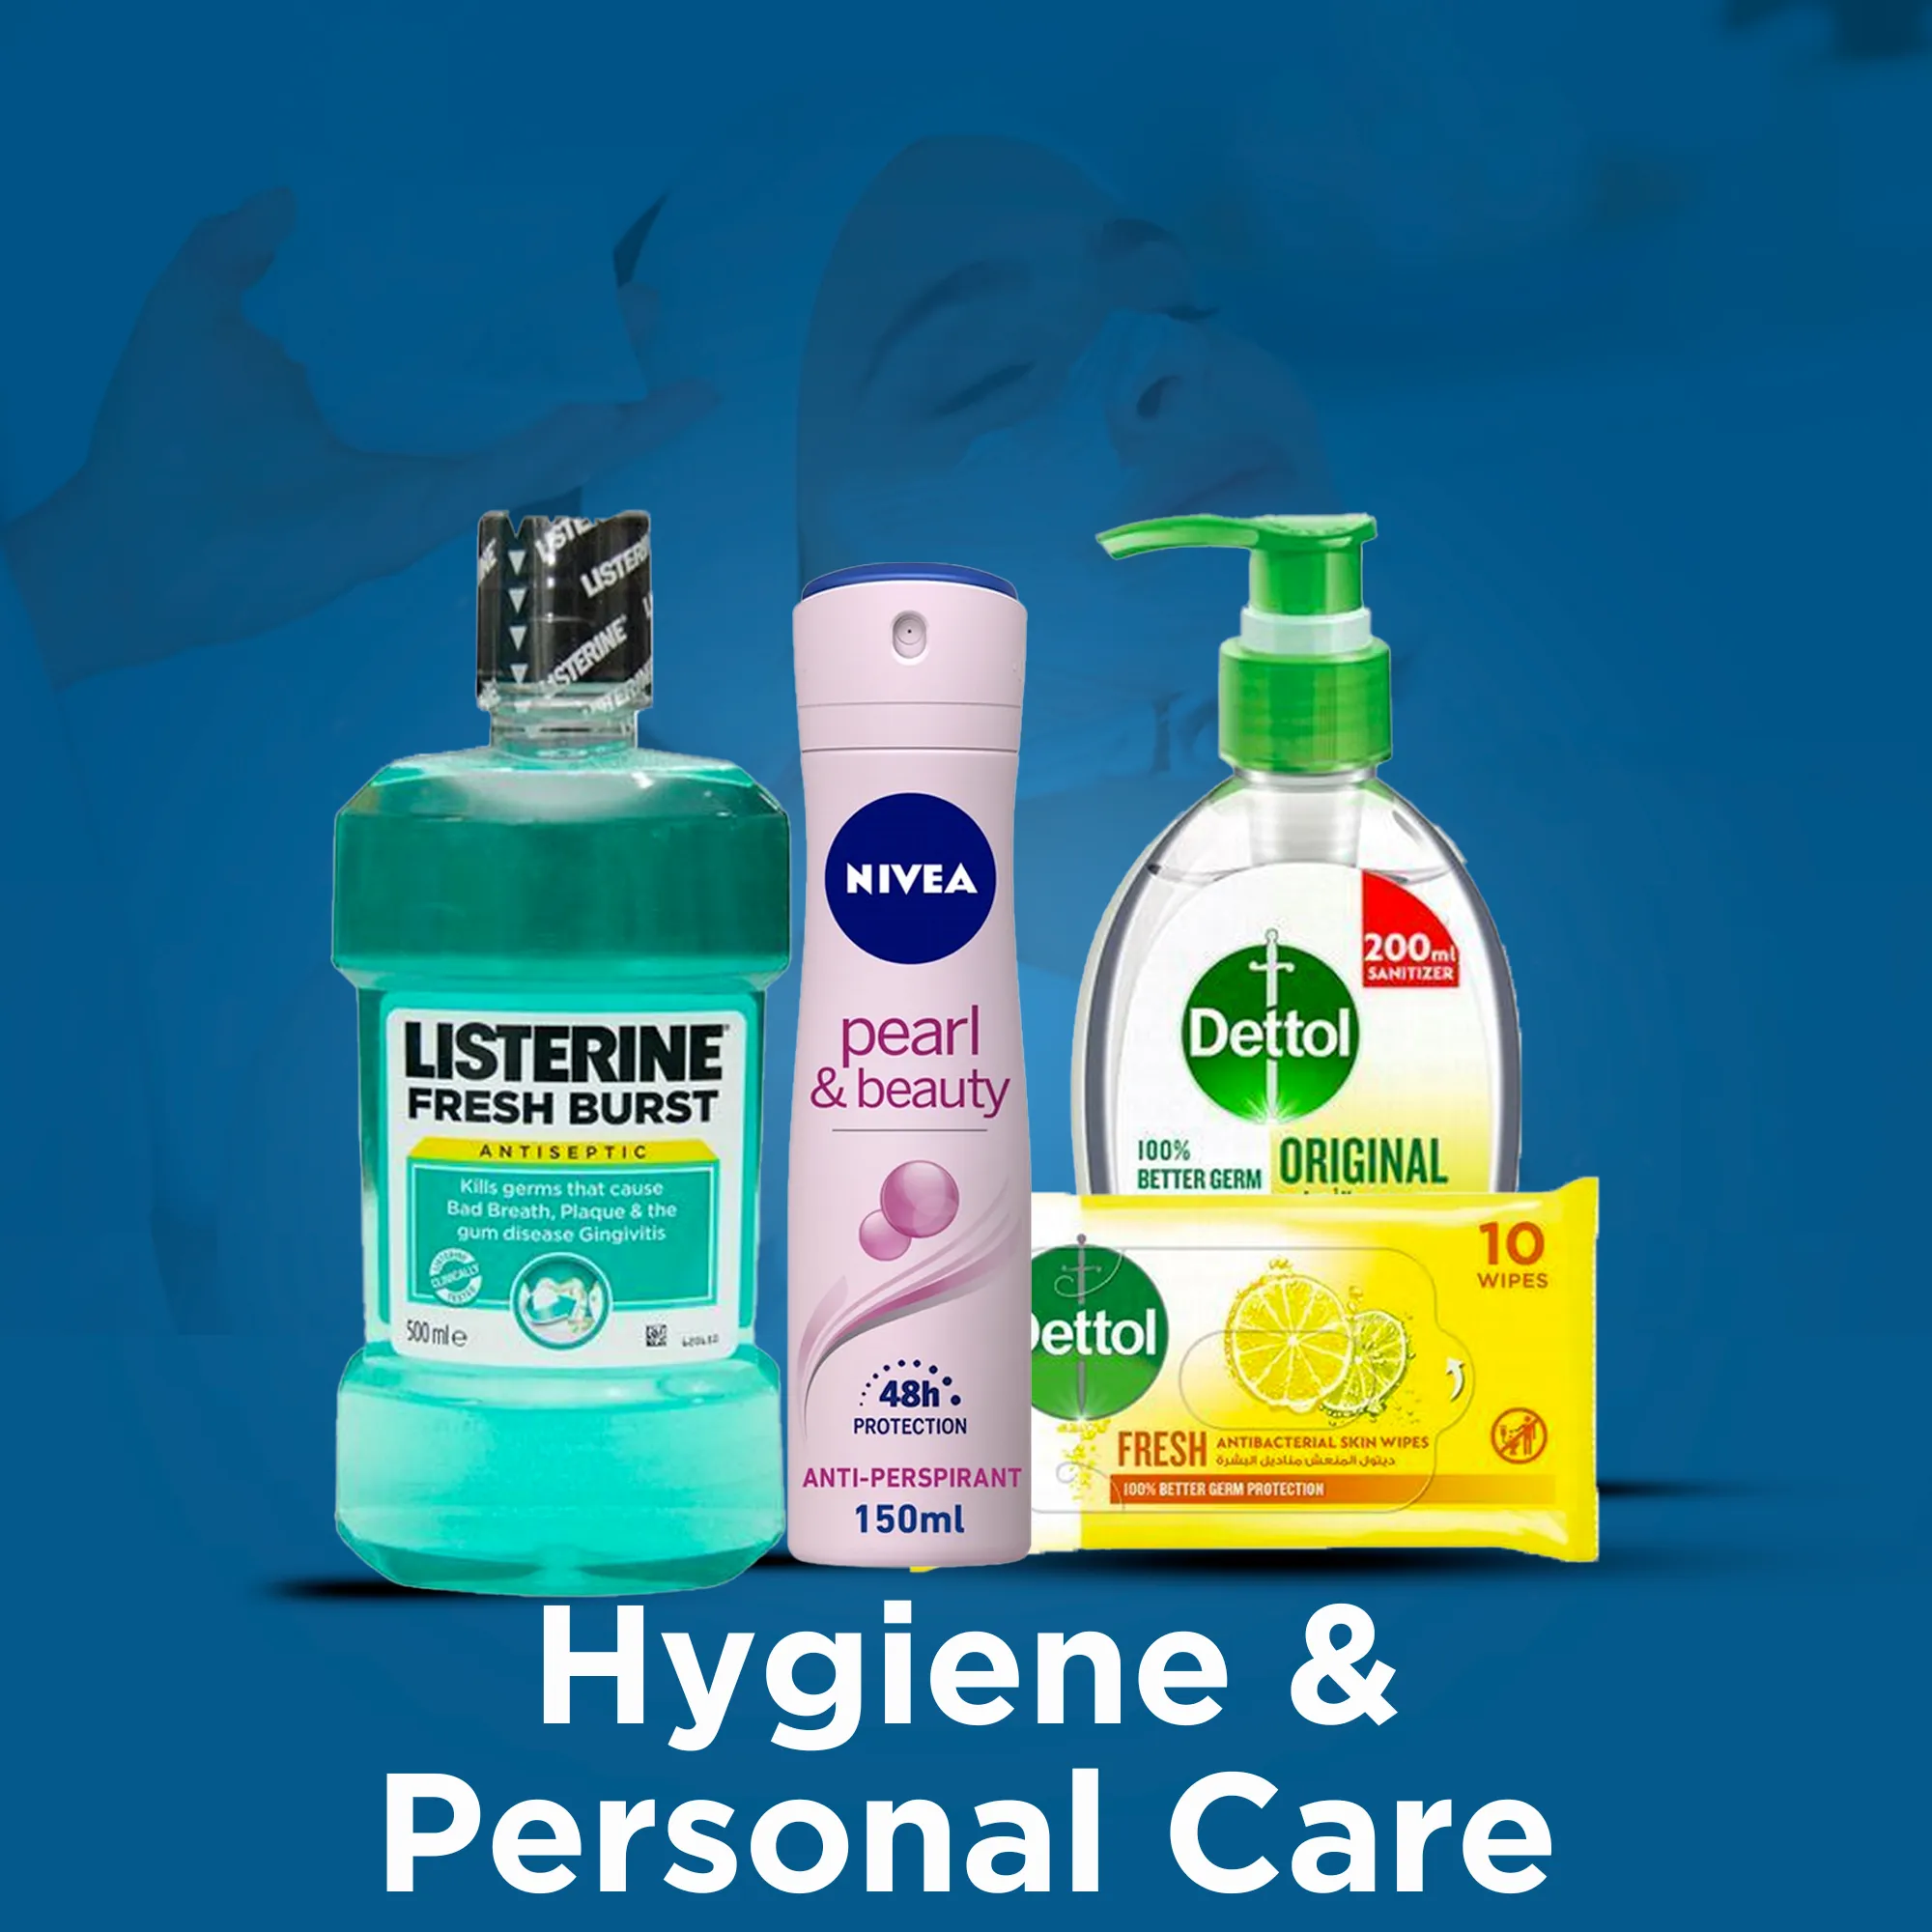 Hygiene & Personal Care